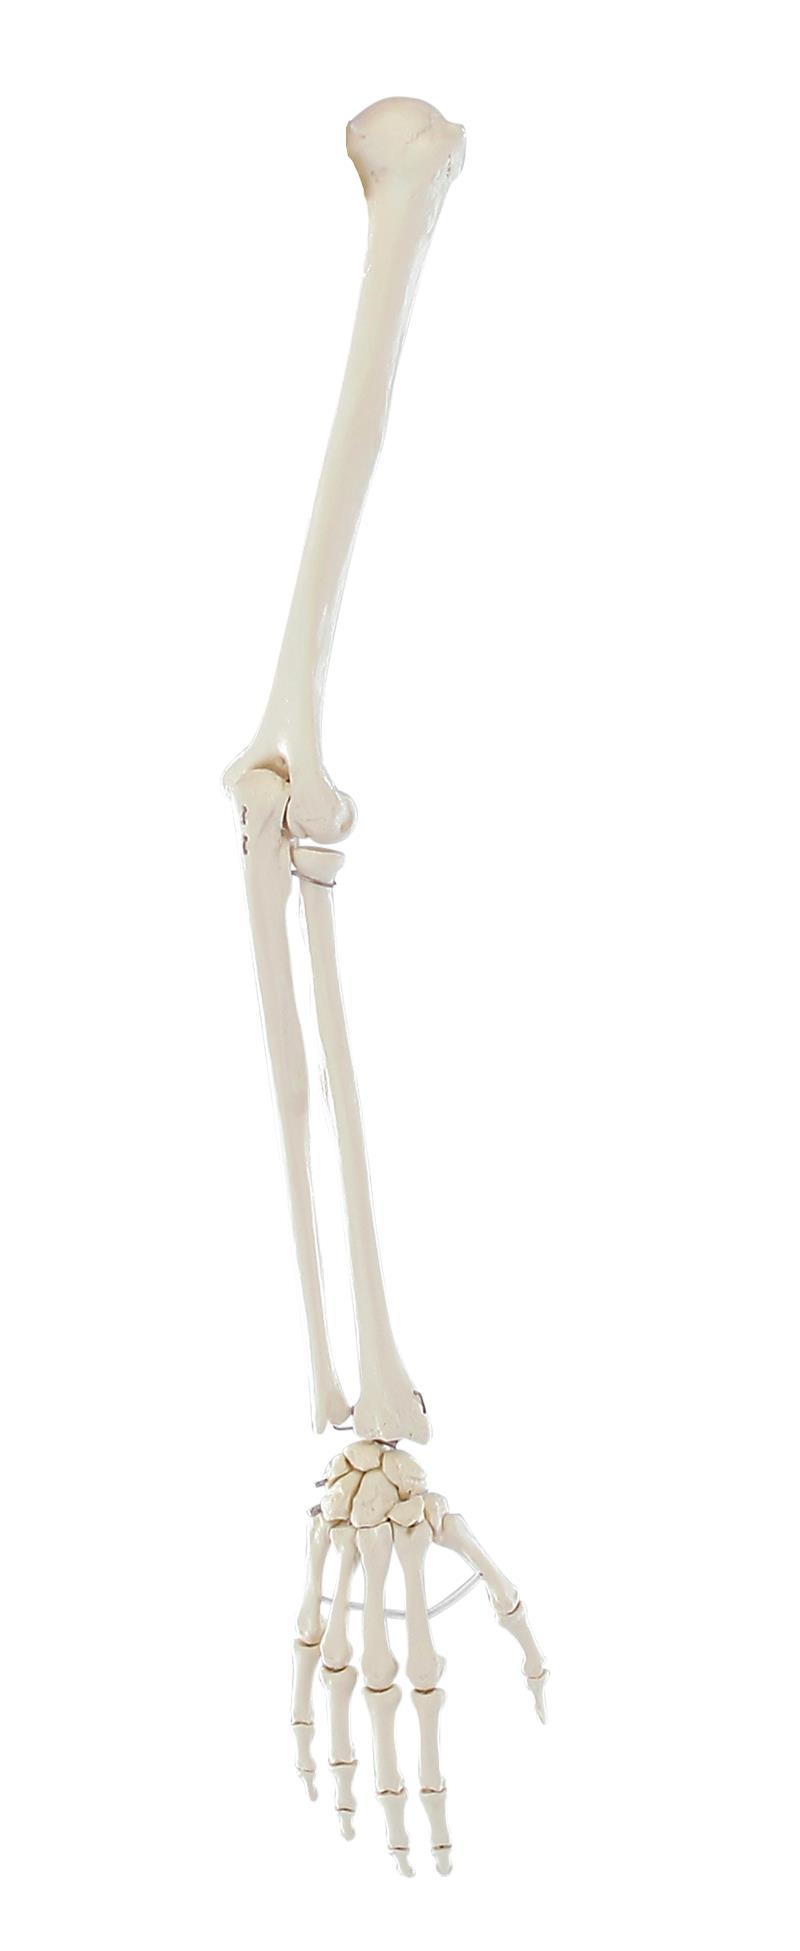 Squelette du bras